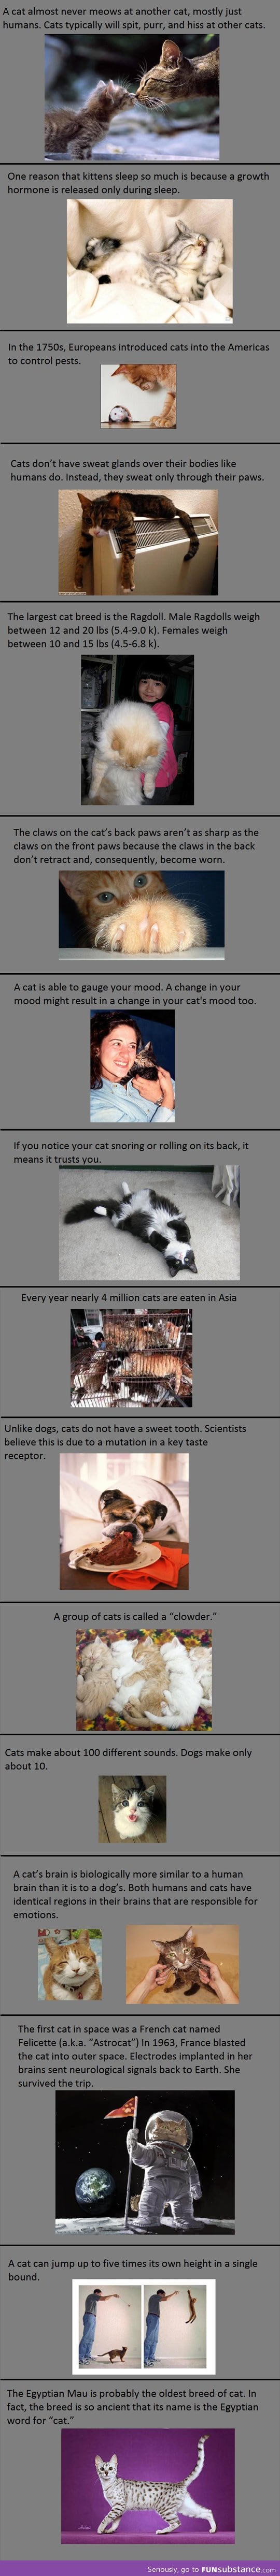 Interesting cat facts